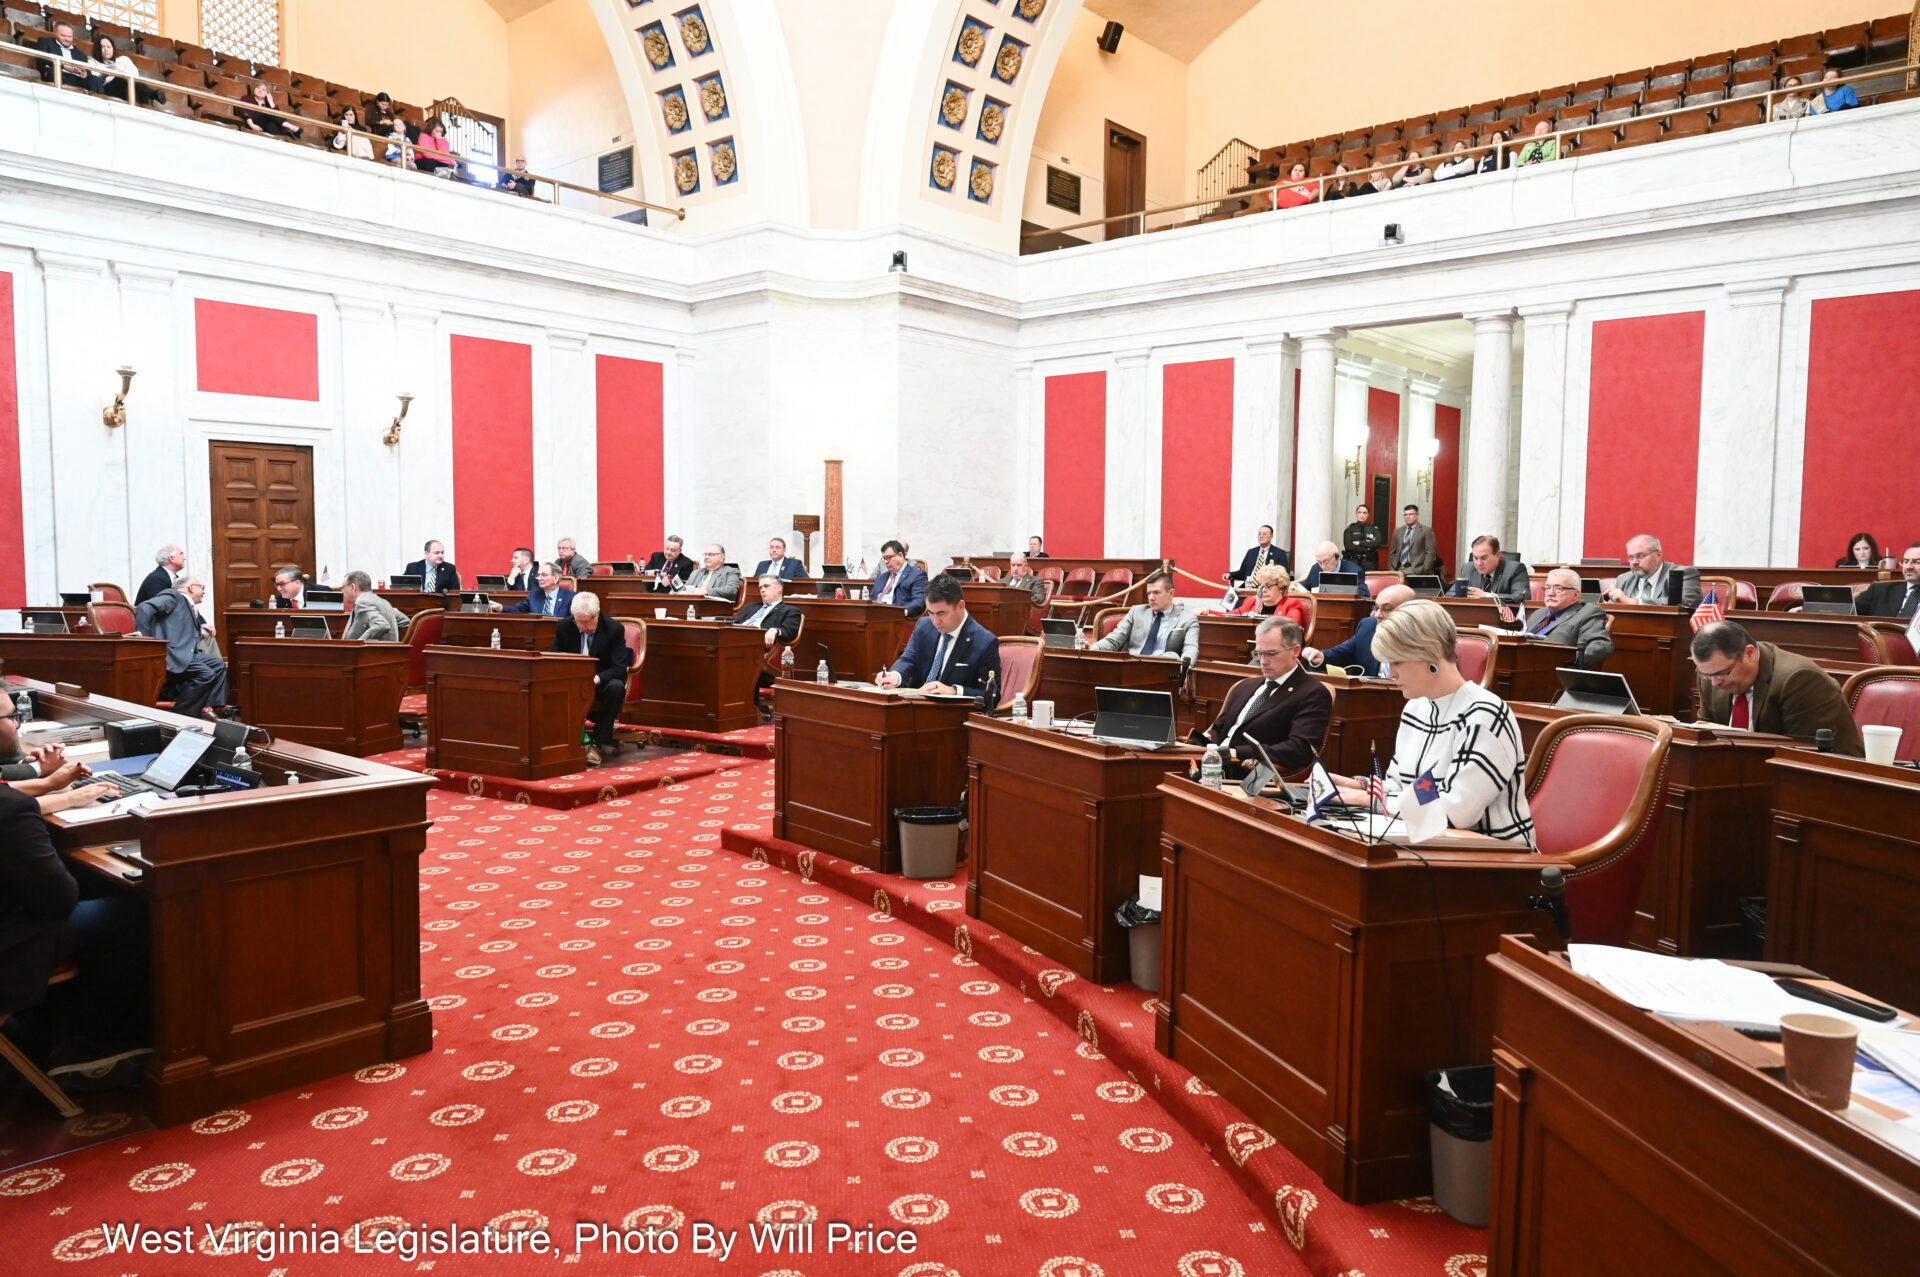 Senate Passes Bill To Change Legislative Audit Rules Regarding Transparency And Oversight